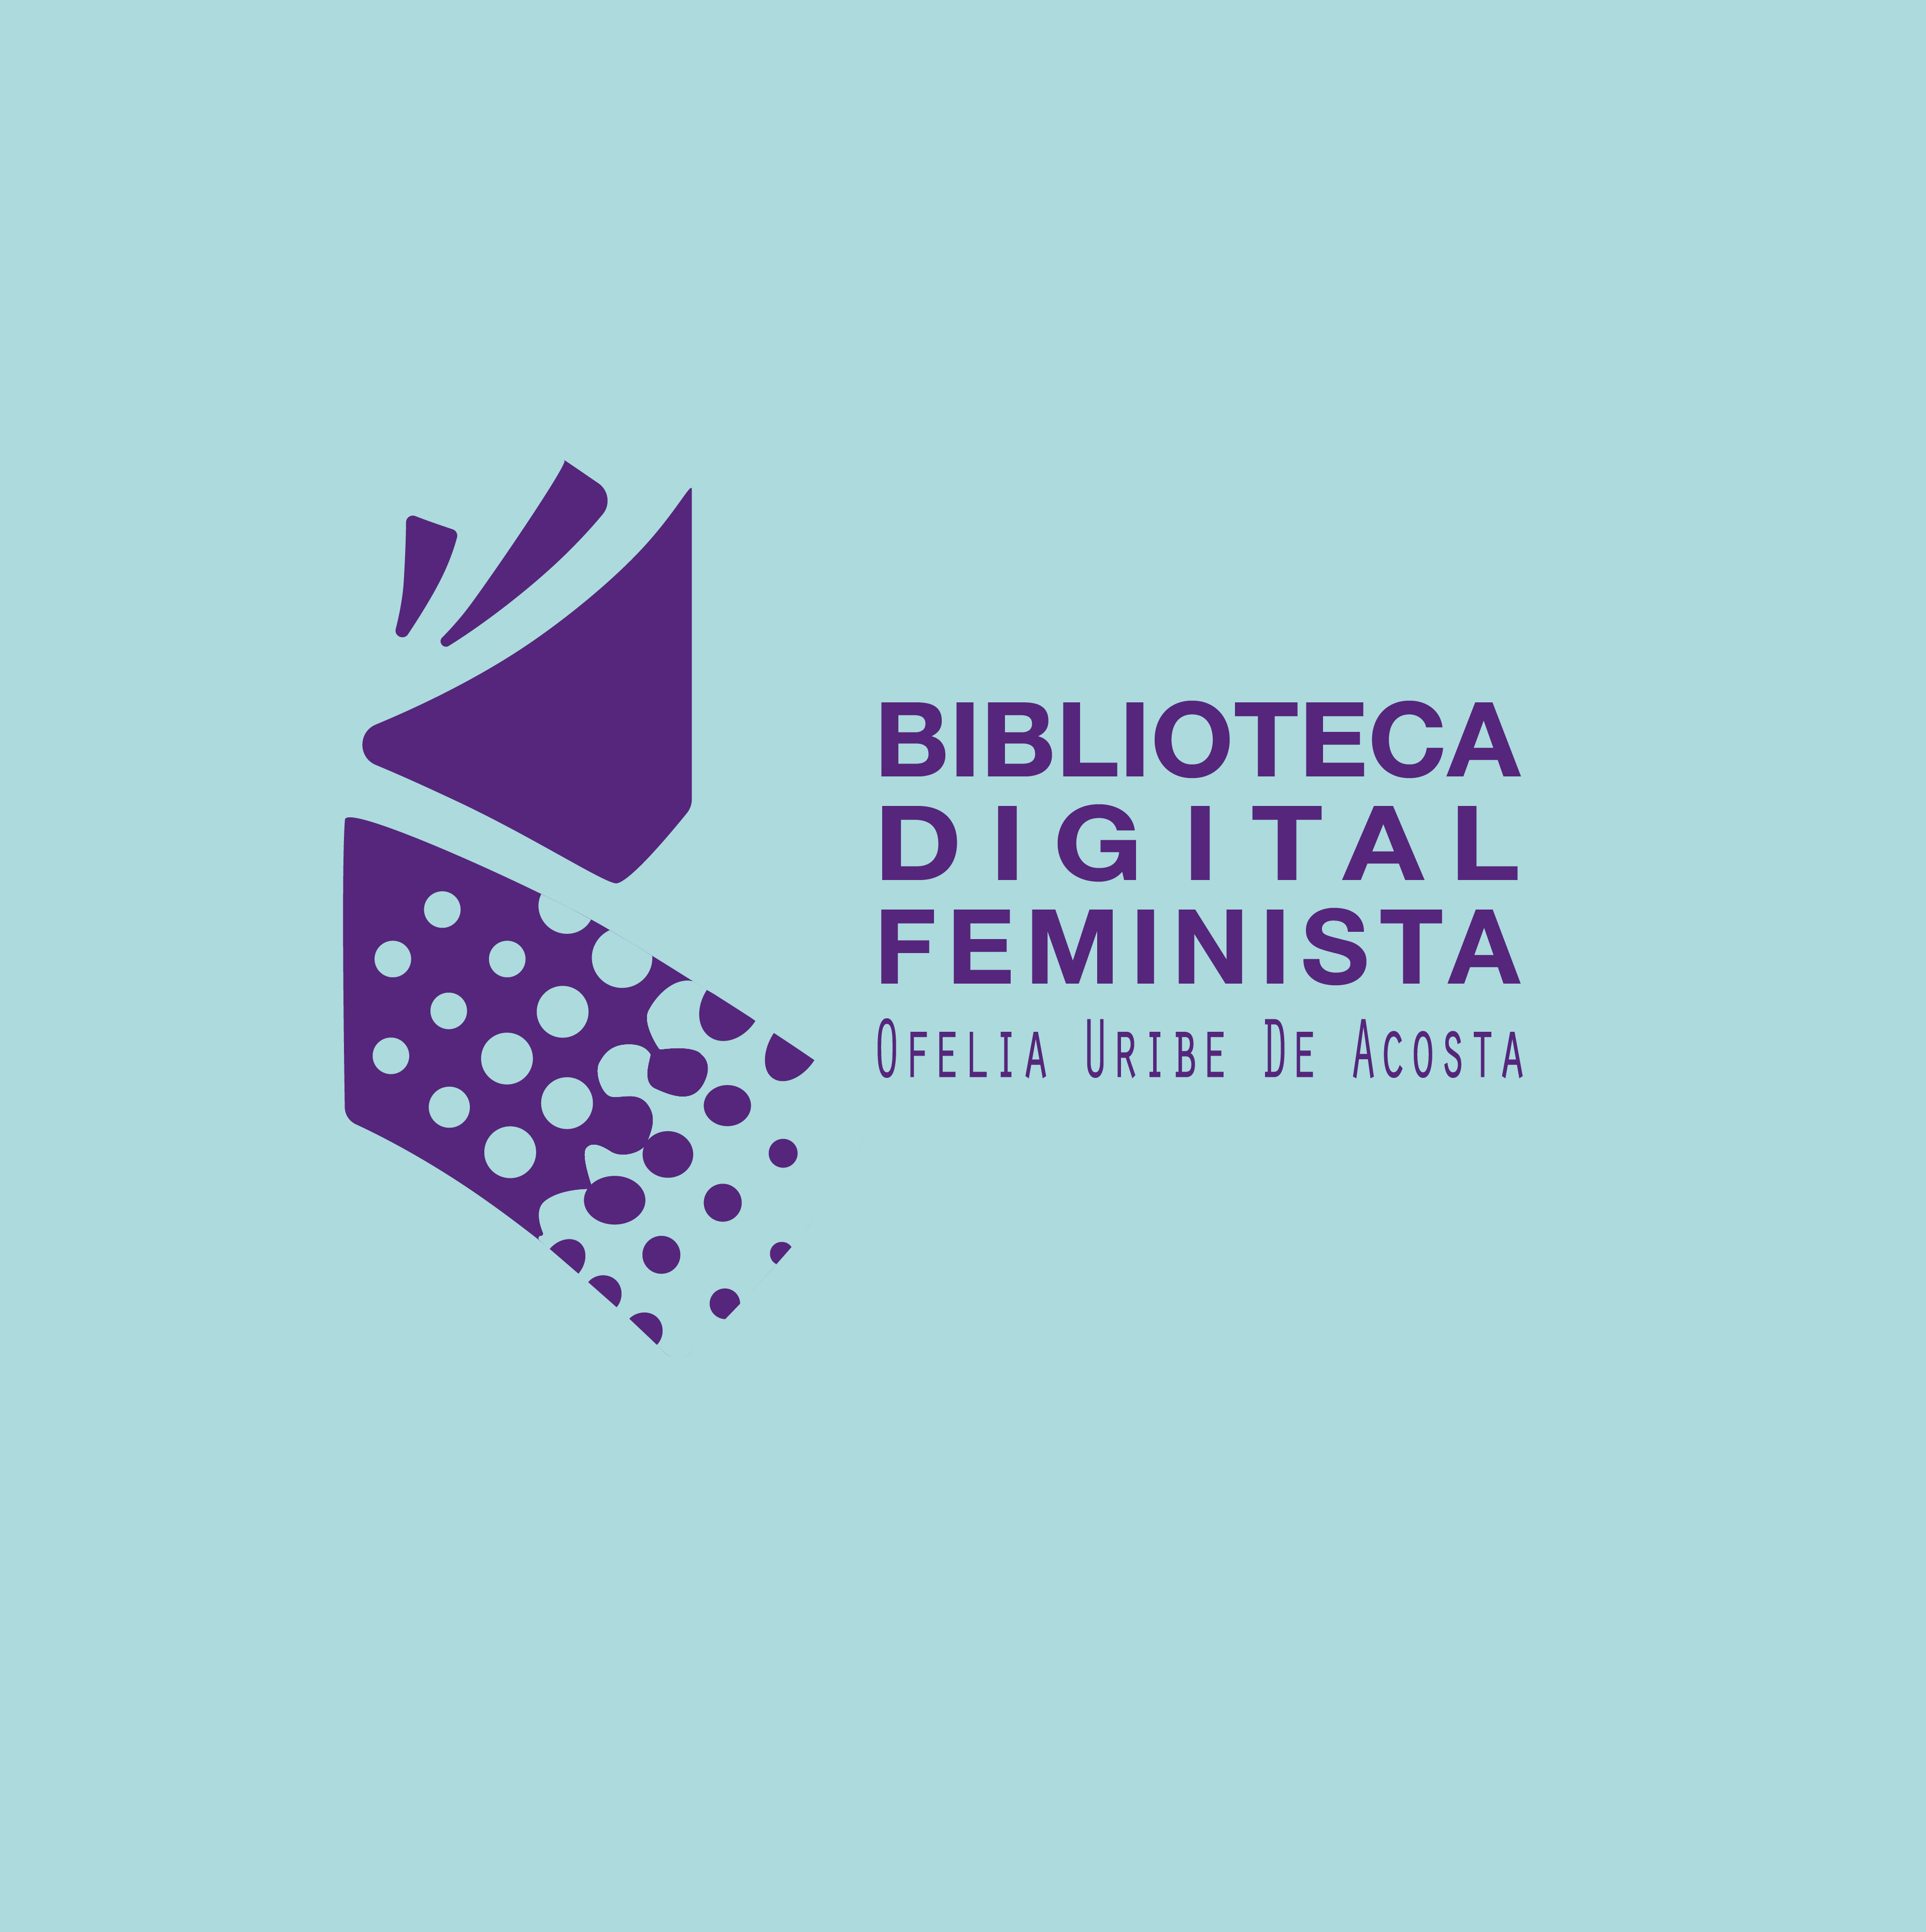 Biblioteca Feminista Ofelia Uribe de Acosta